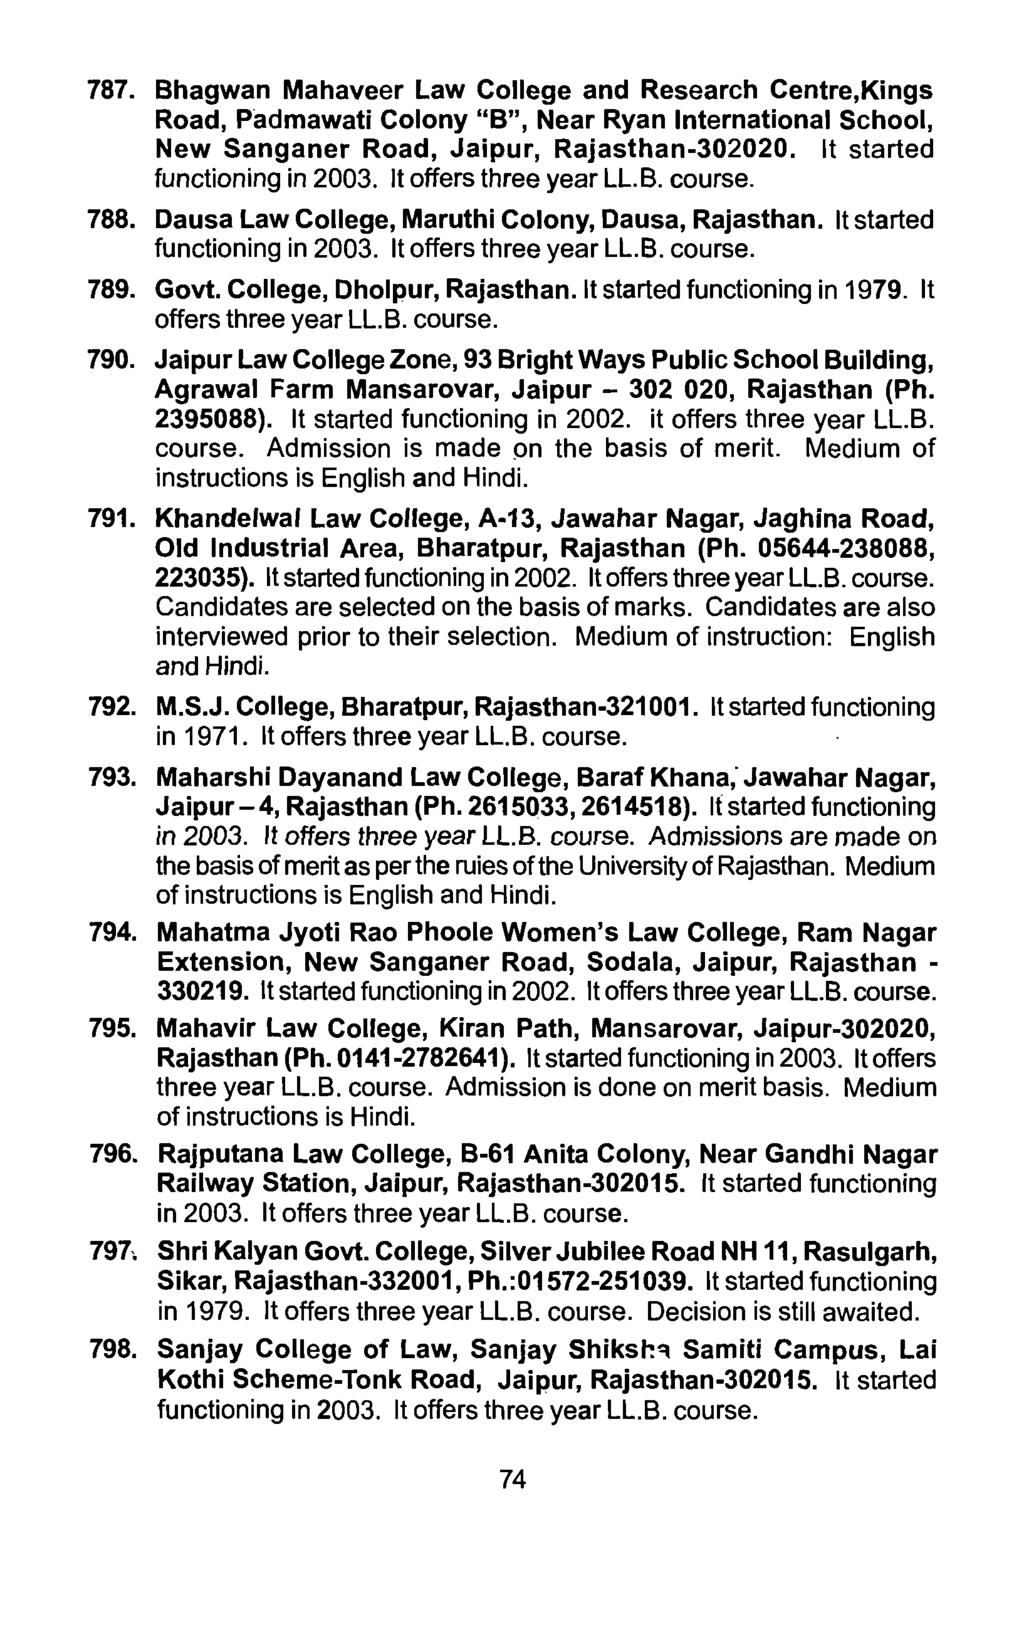 787. Bhagwan Mahaveer Law College and Research Centre,Kings Road, Padmawati Colony B, Near Ryan International School, New Sanganer Road, Jaipur, Rajasthan-302020. It started functioning in 2003.